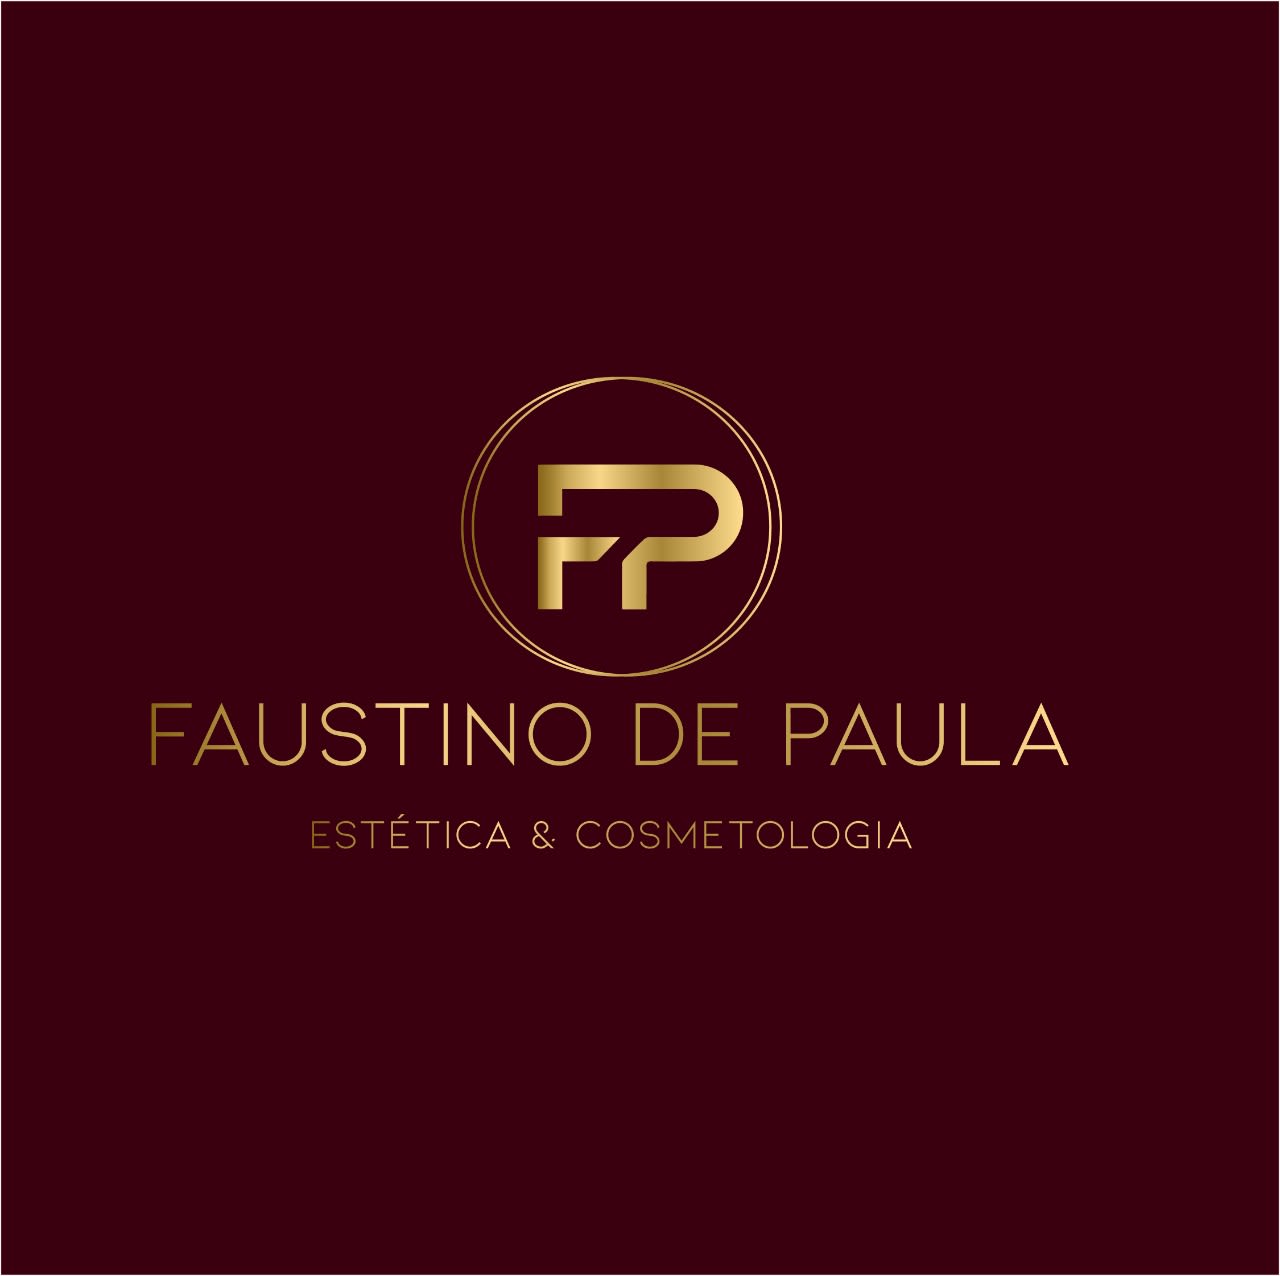 Faustino de Paula